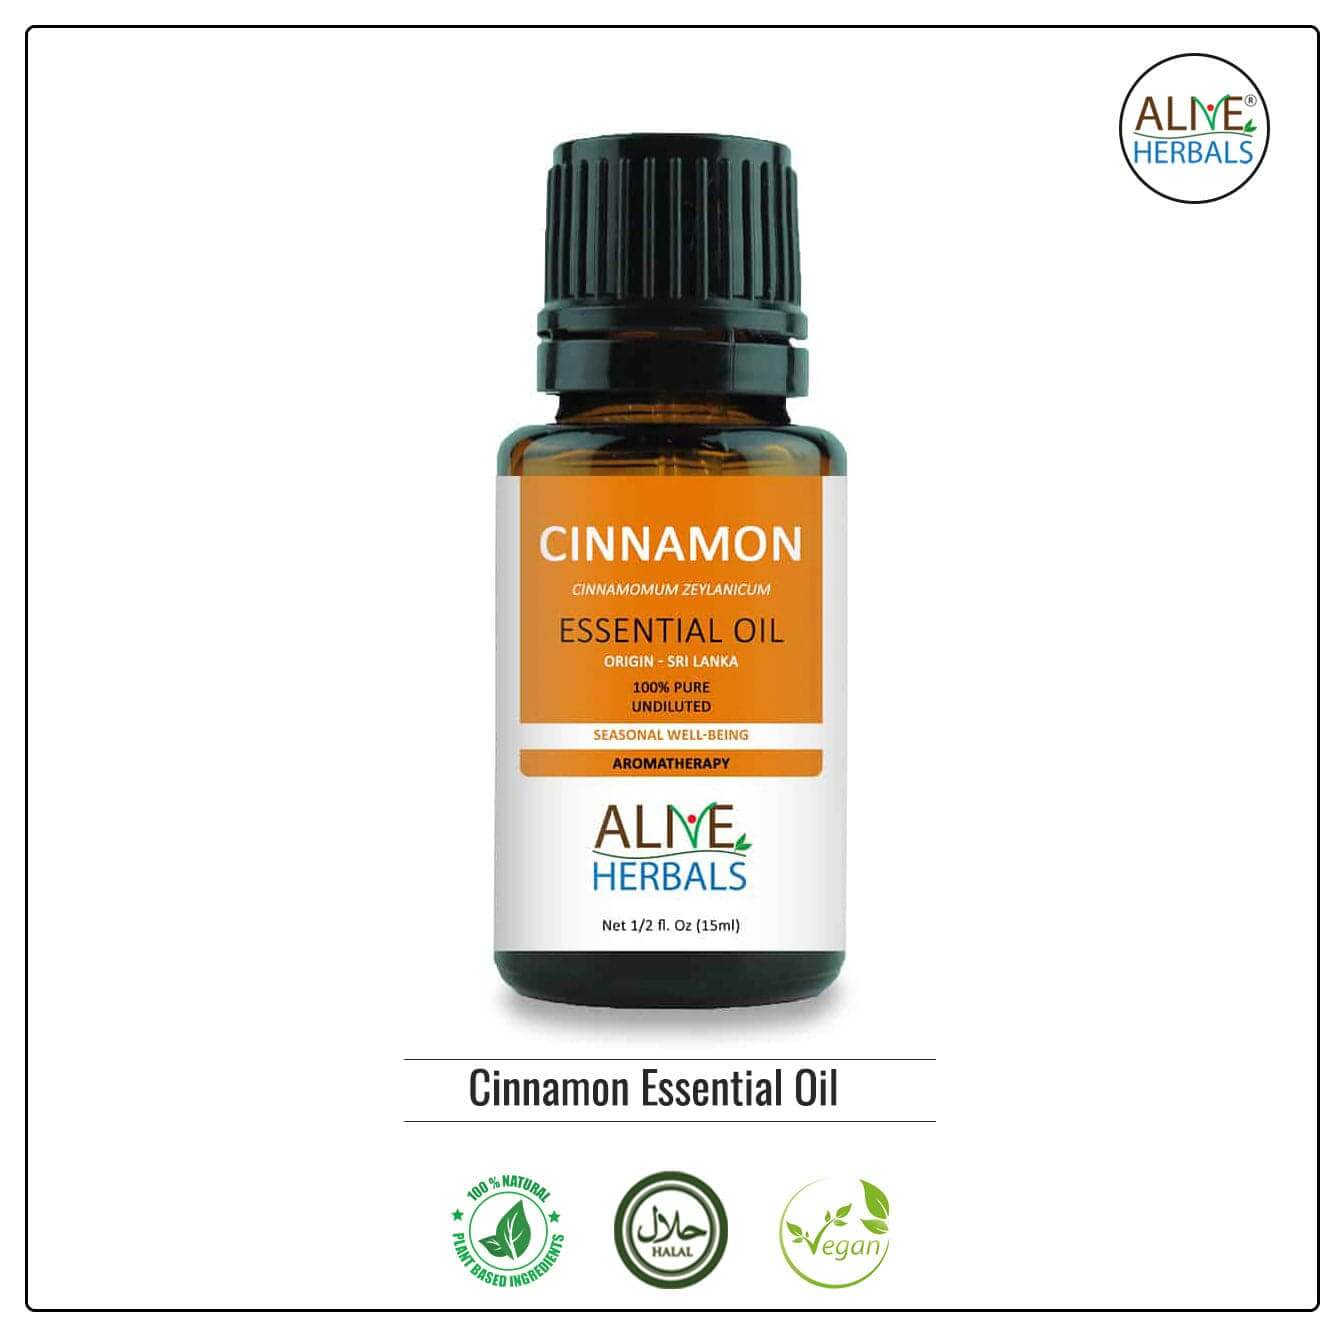 Cinnamon Essential Oil - Buy at Natural Food Store | Alive Herbals.